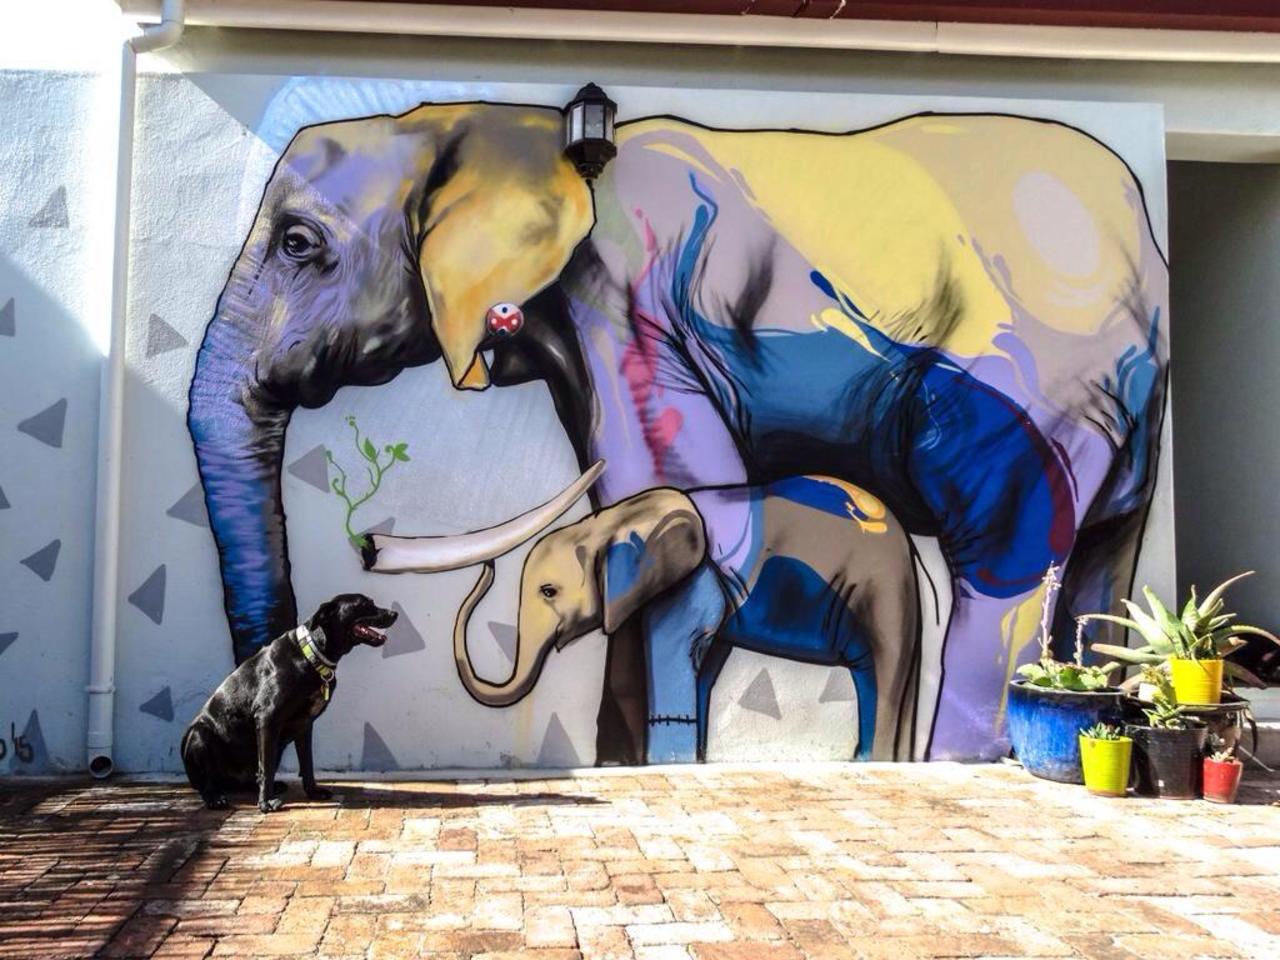 Latest nature in Street Art piece by Falko Paints In Cape Town

#art #mural #graffiti #streetart http://t.co/nvbXnfO4IO